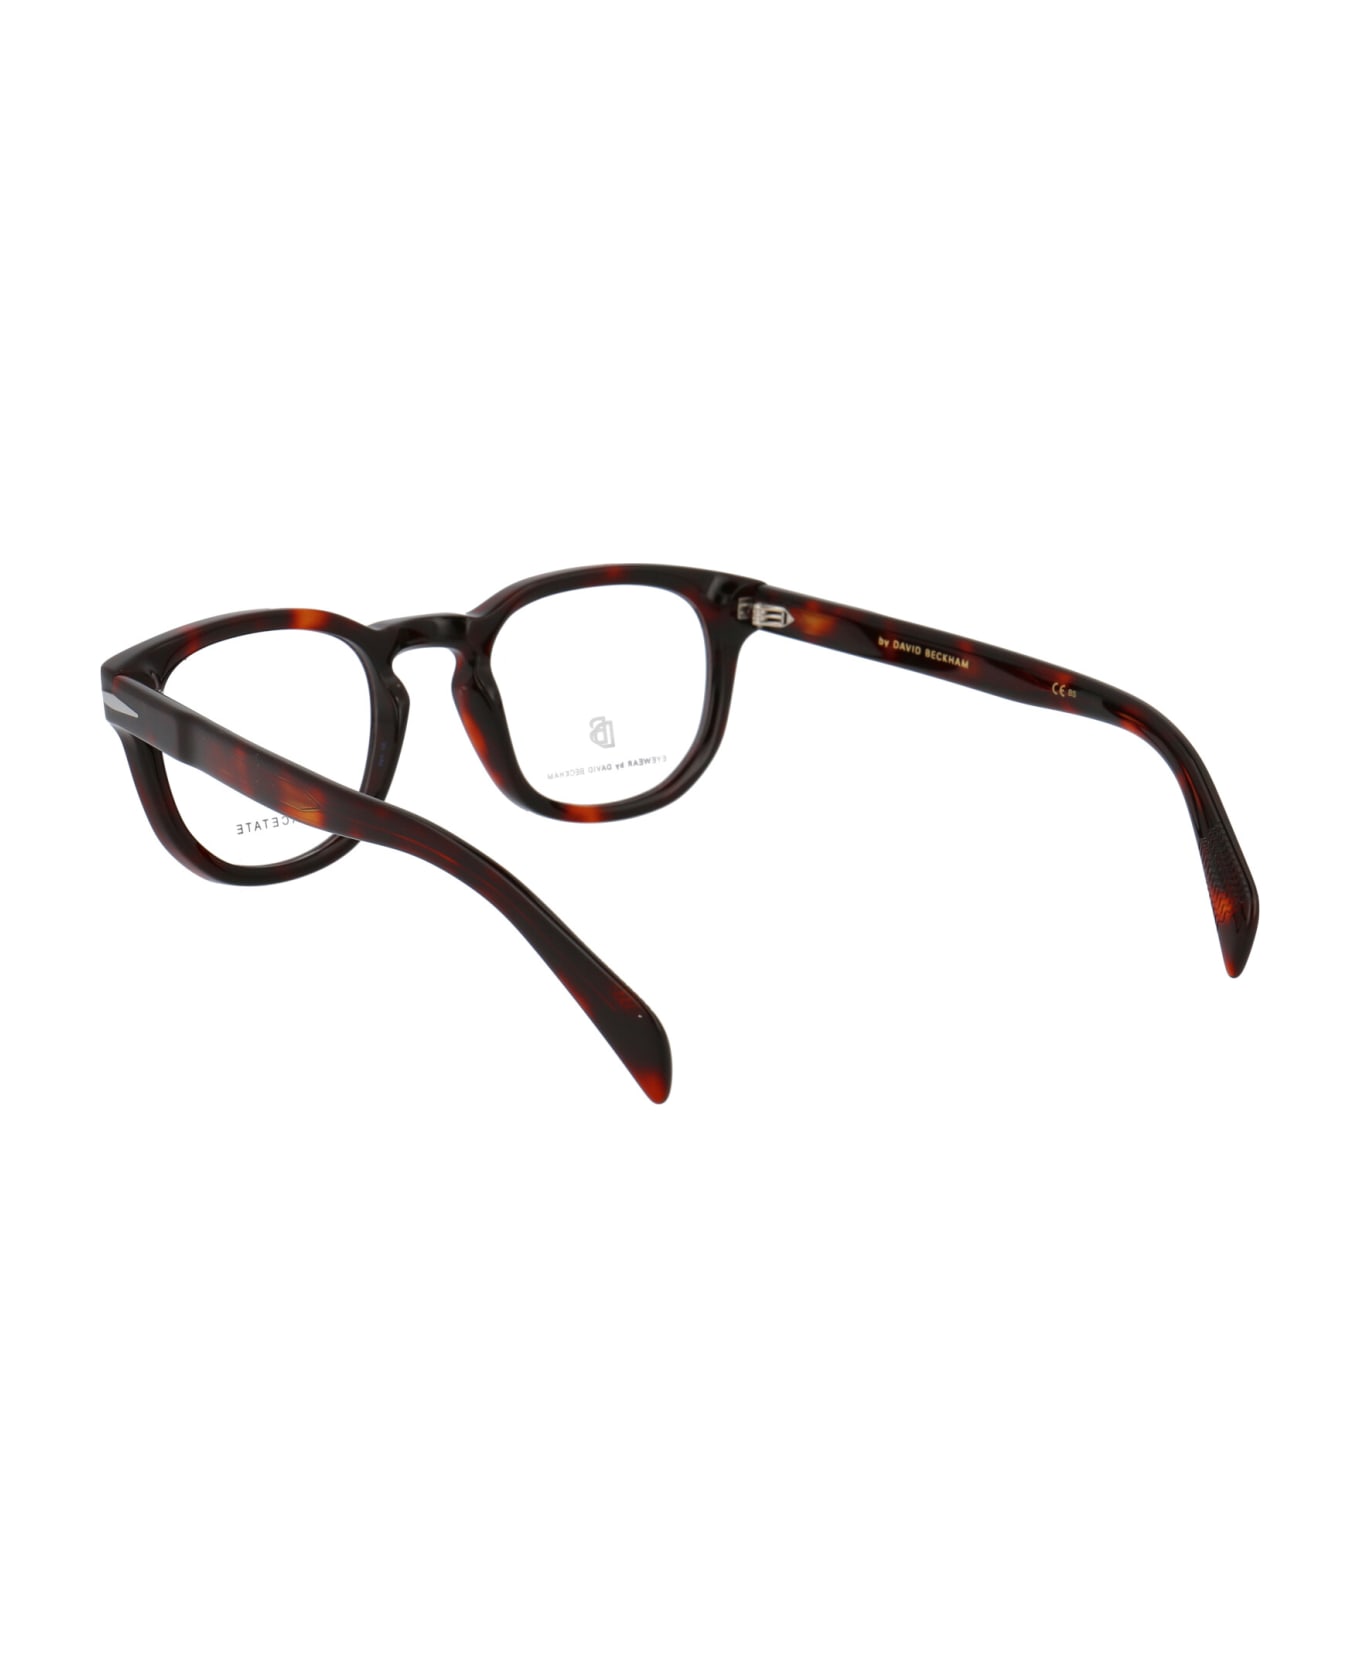 DB Eyewear by David Beckham Db 7050 Glasses - 0UC RED HAVANA アイウェア